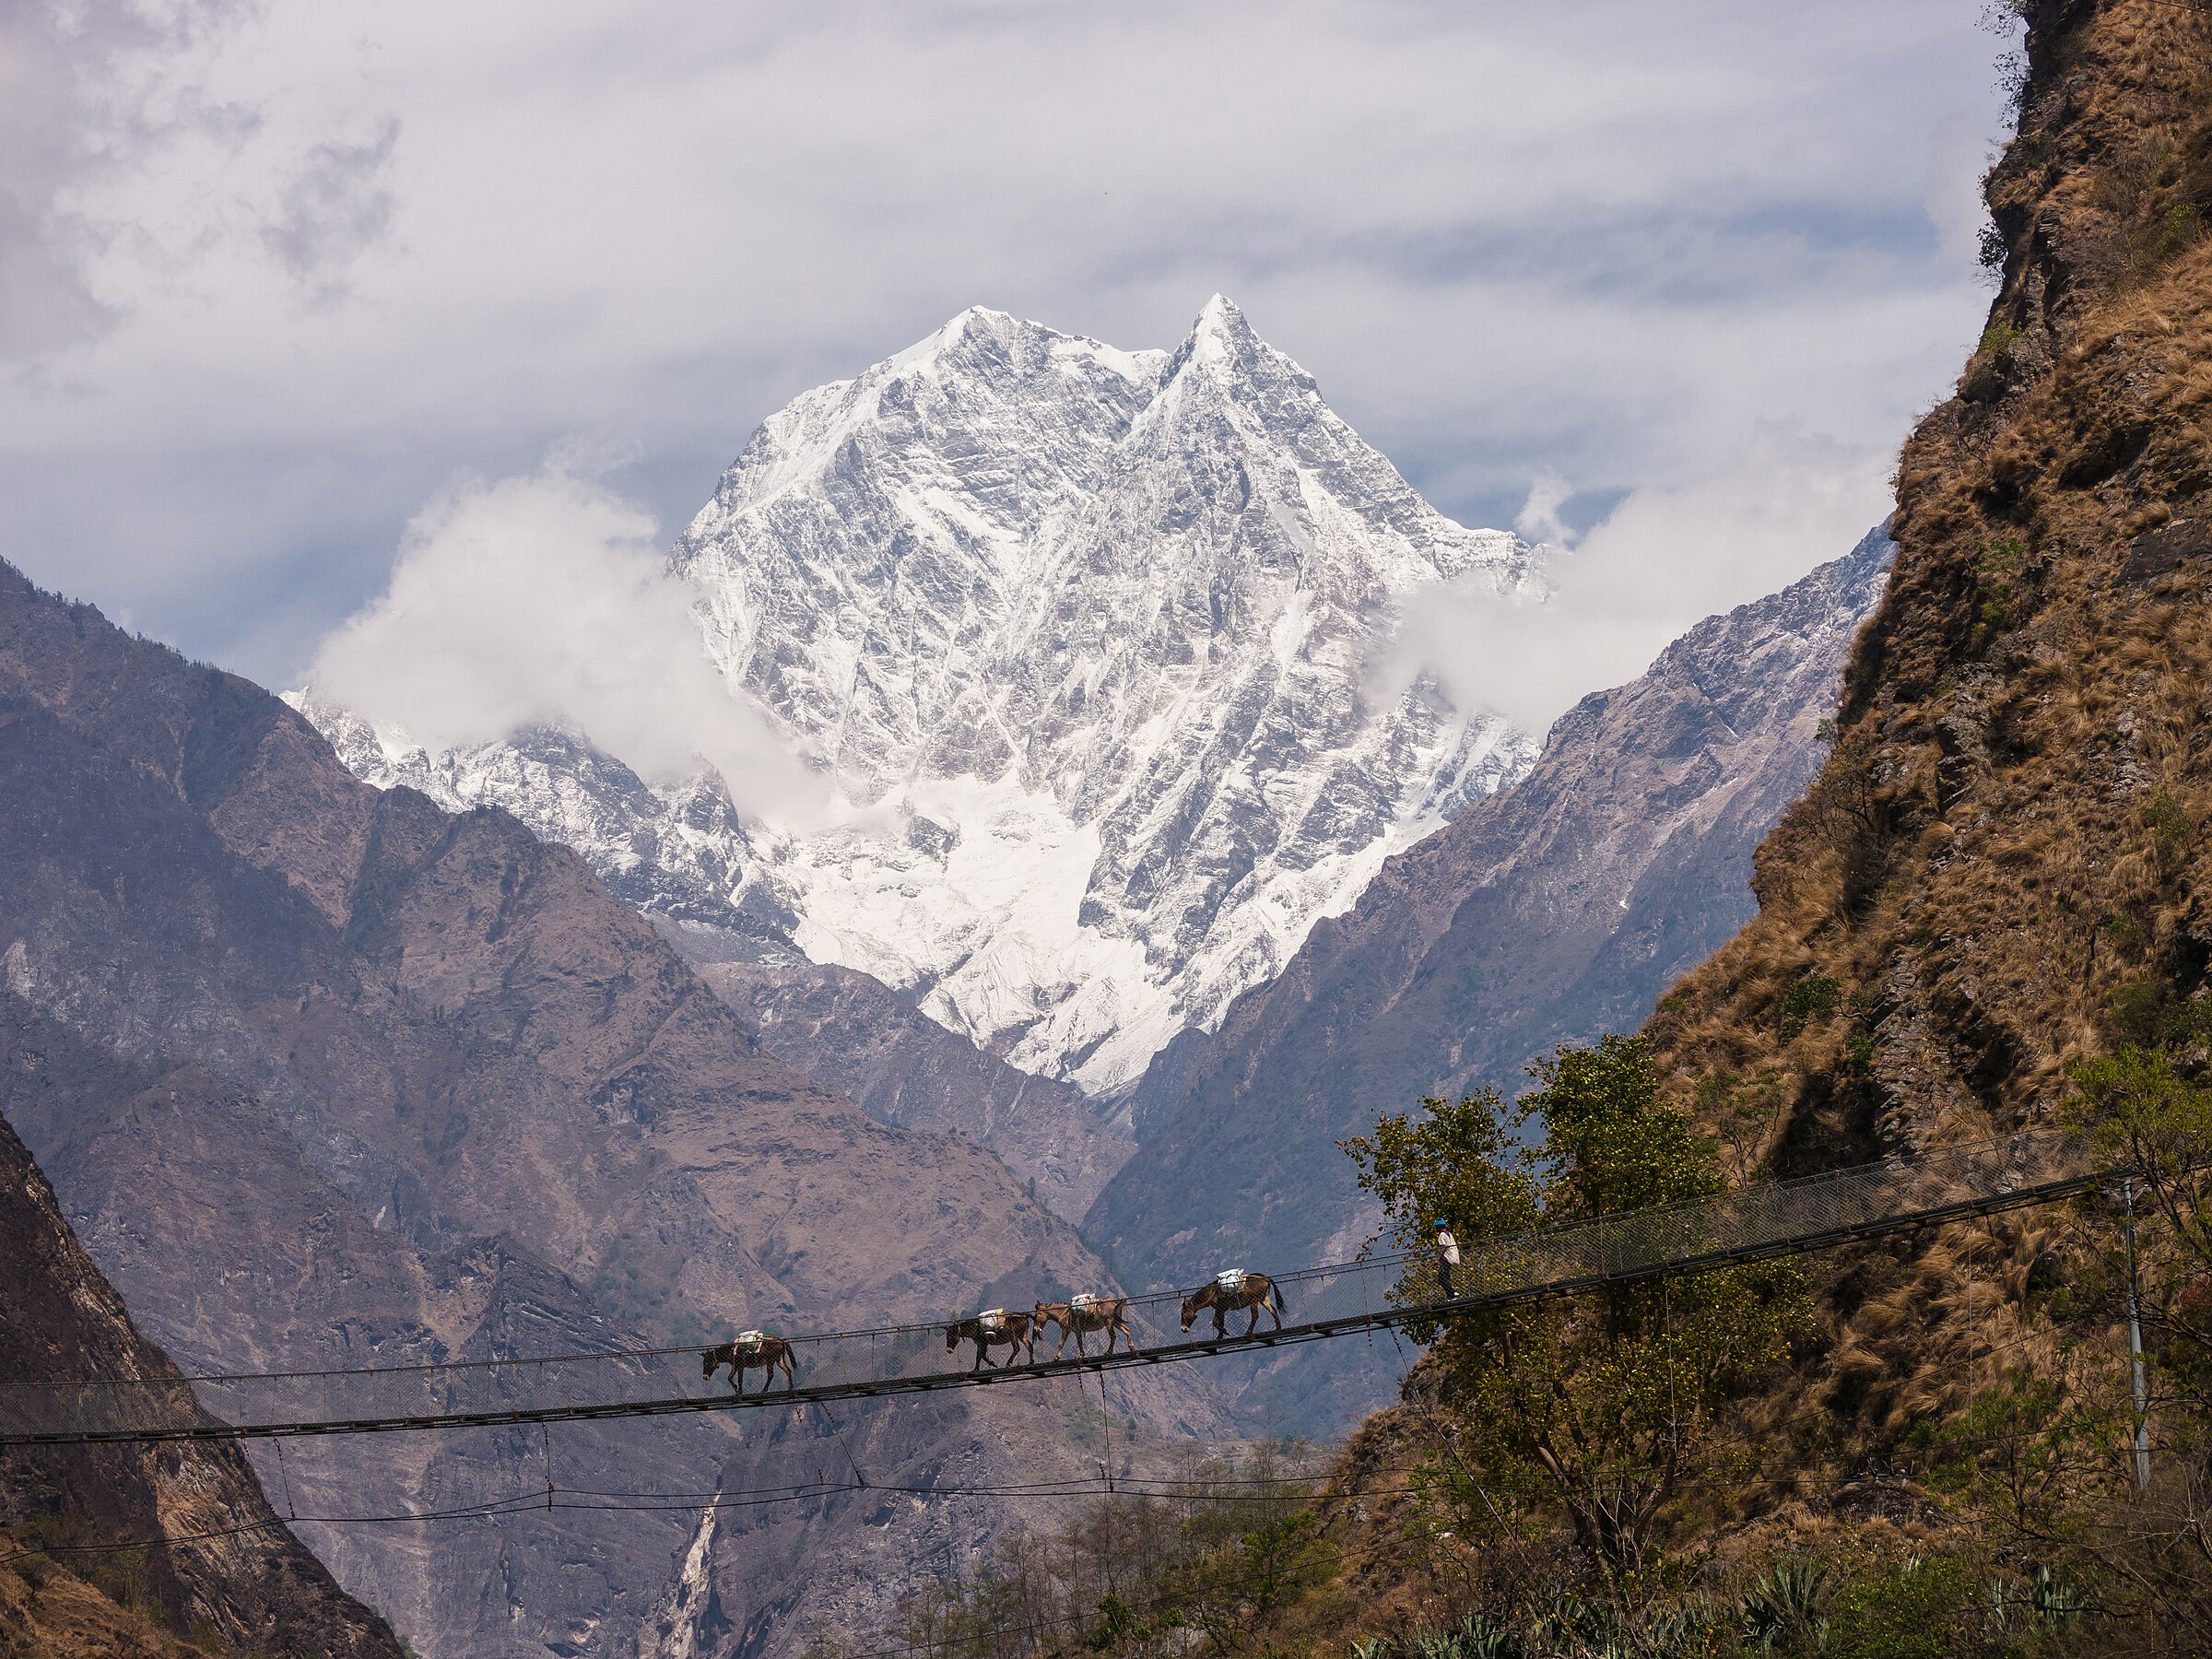 Nilgiri South (6,839m) forms an impressive backdrop to a large suspension bridge over the Kali Gandaki river near Tatopani. © Frank Jones